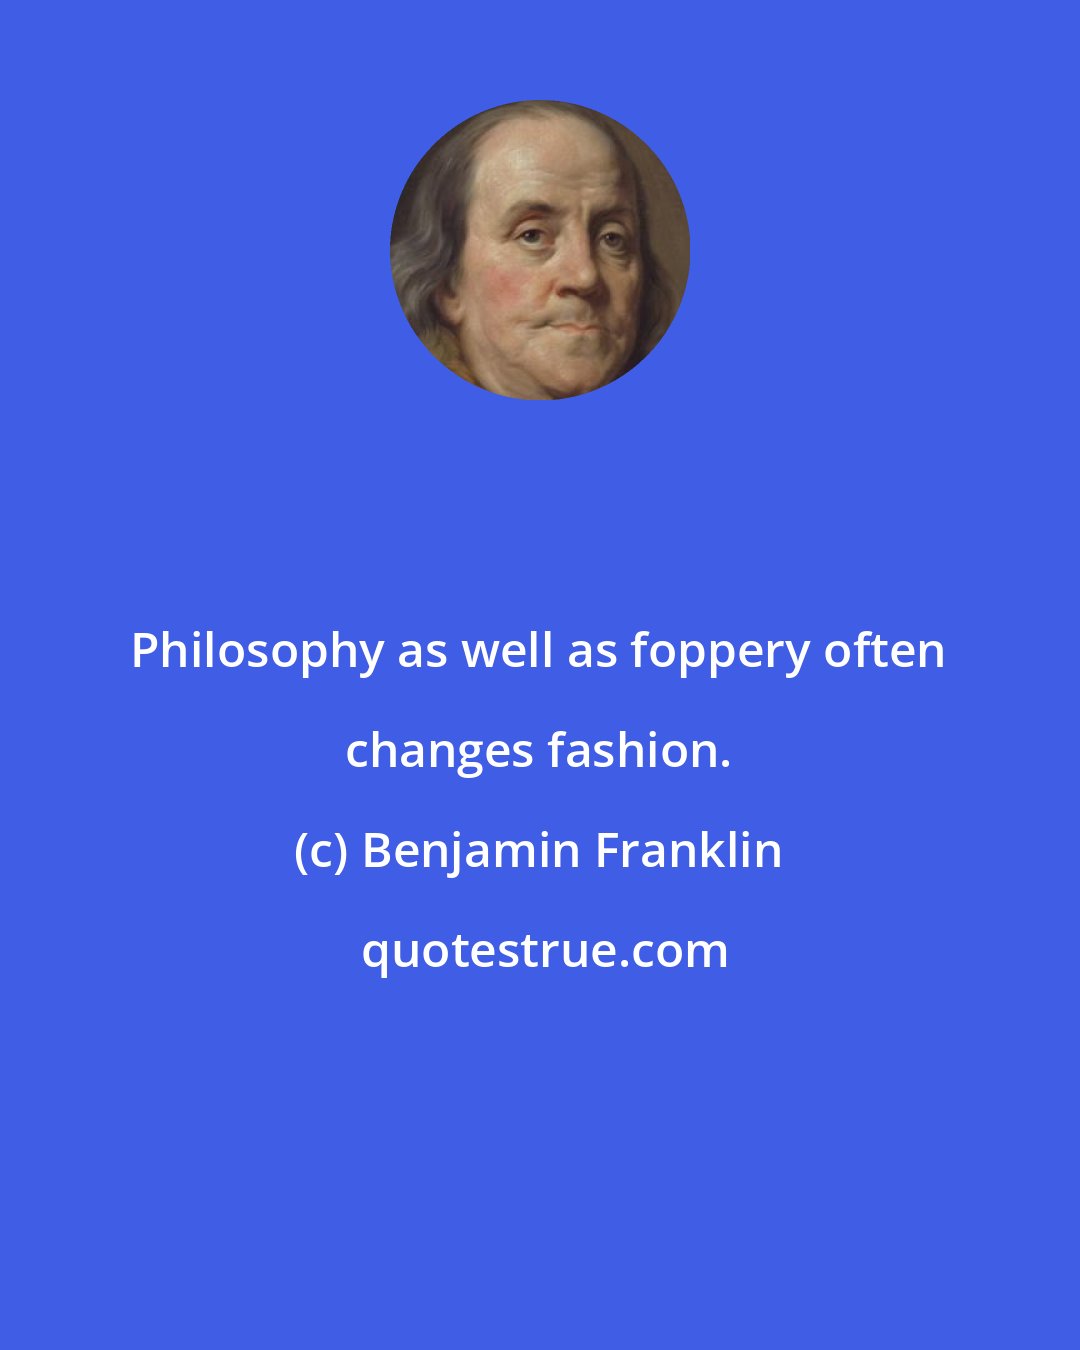 Benjamin Franklin: Philosophy as well as foppery often changes fashion.